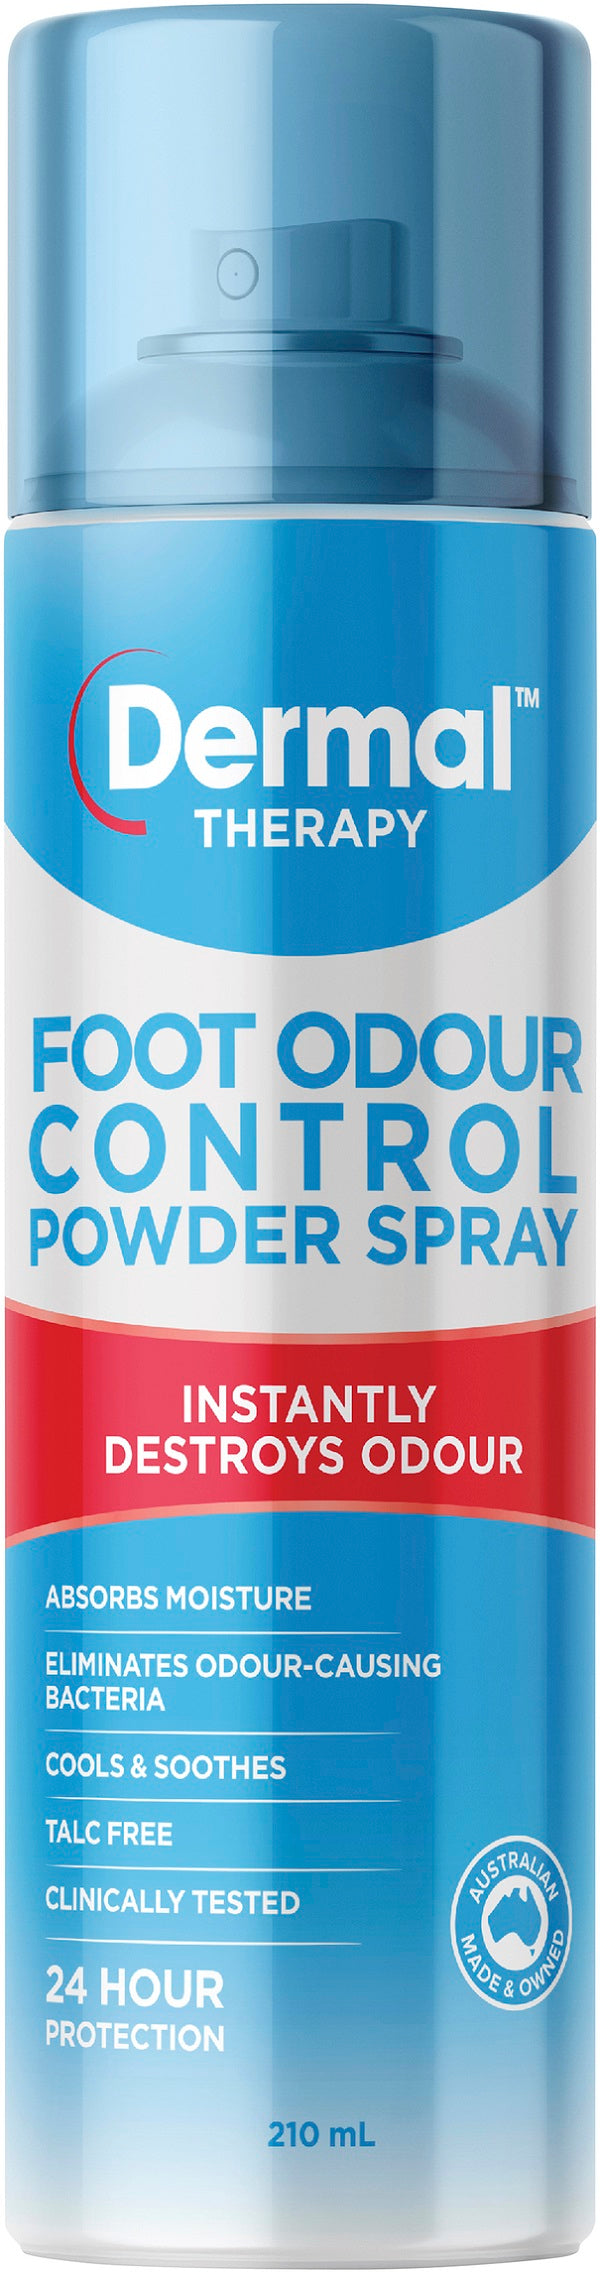 DERMAL THERAPY Foot Odour Control Powder Spray